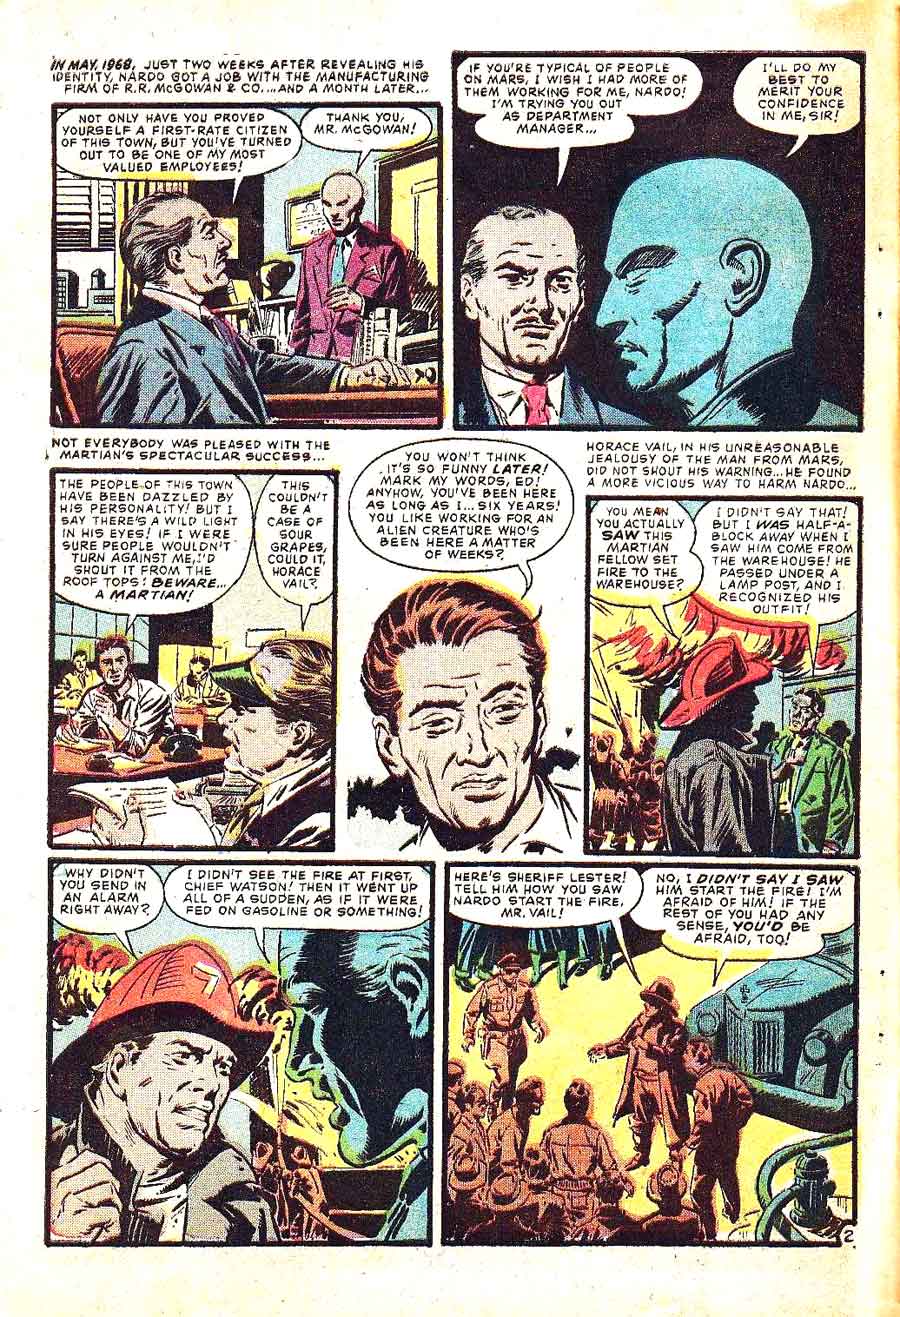 Strange Stories of Suspense #14 golden age 1950s atlas comic book page art by Al Williamson